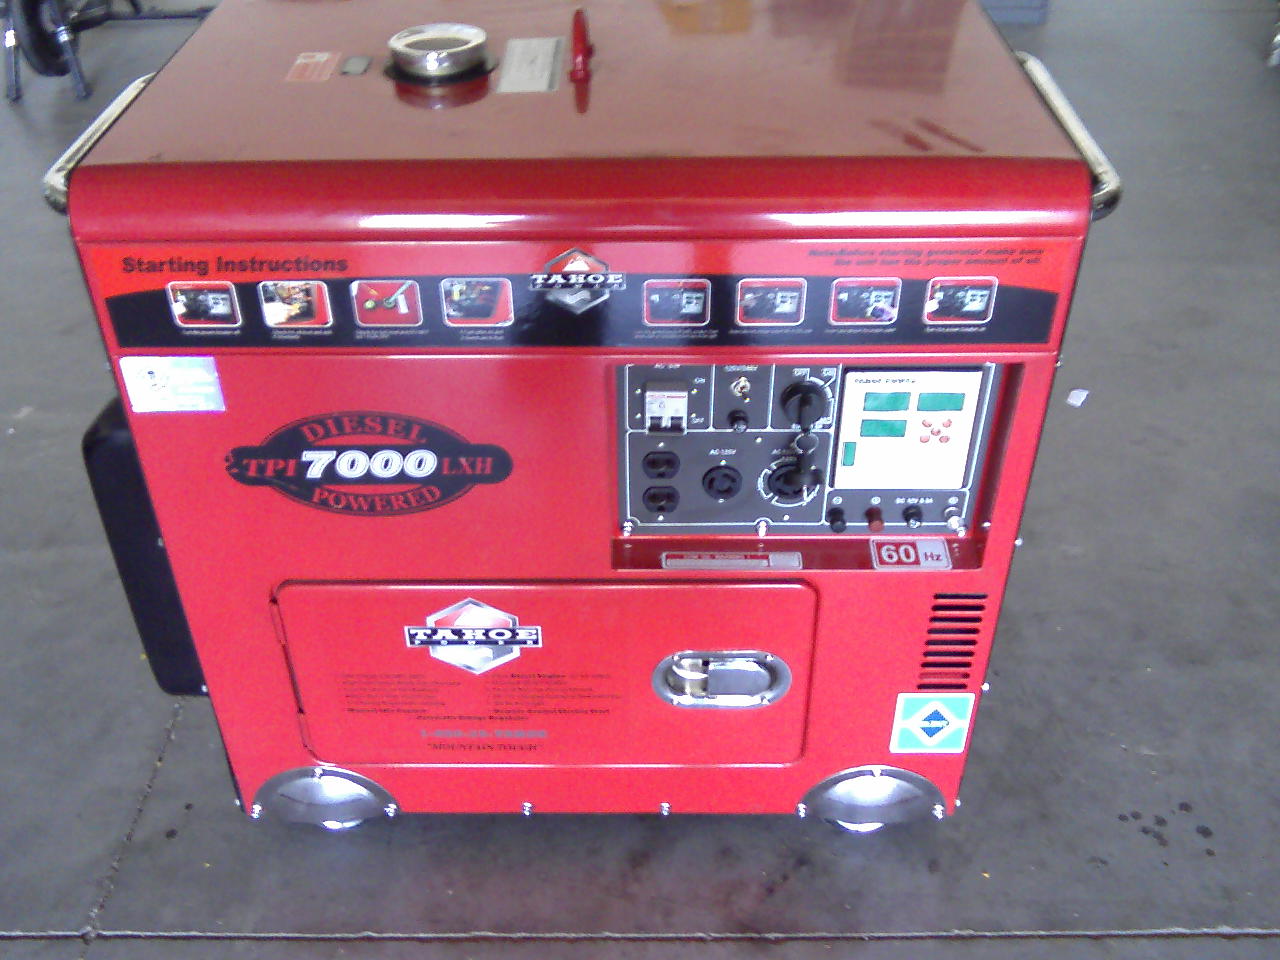 Tahoe Brand, Honda Powered 7000 Watt Diesel Generator Model TPI7000LXR